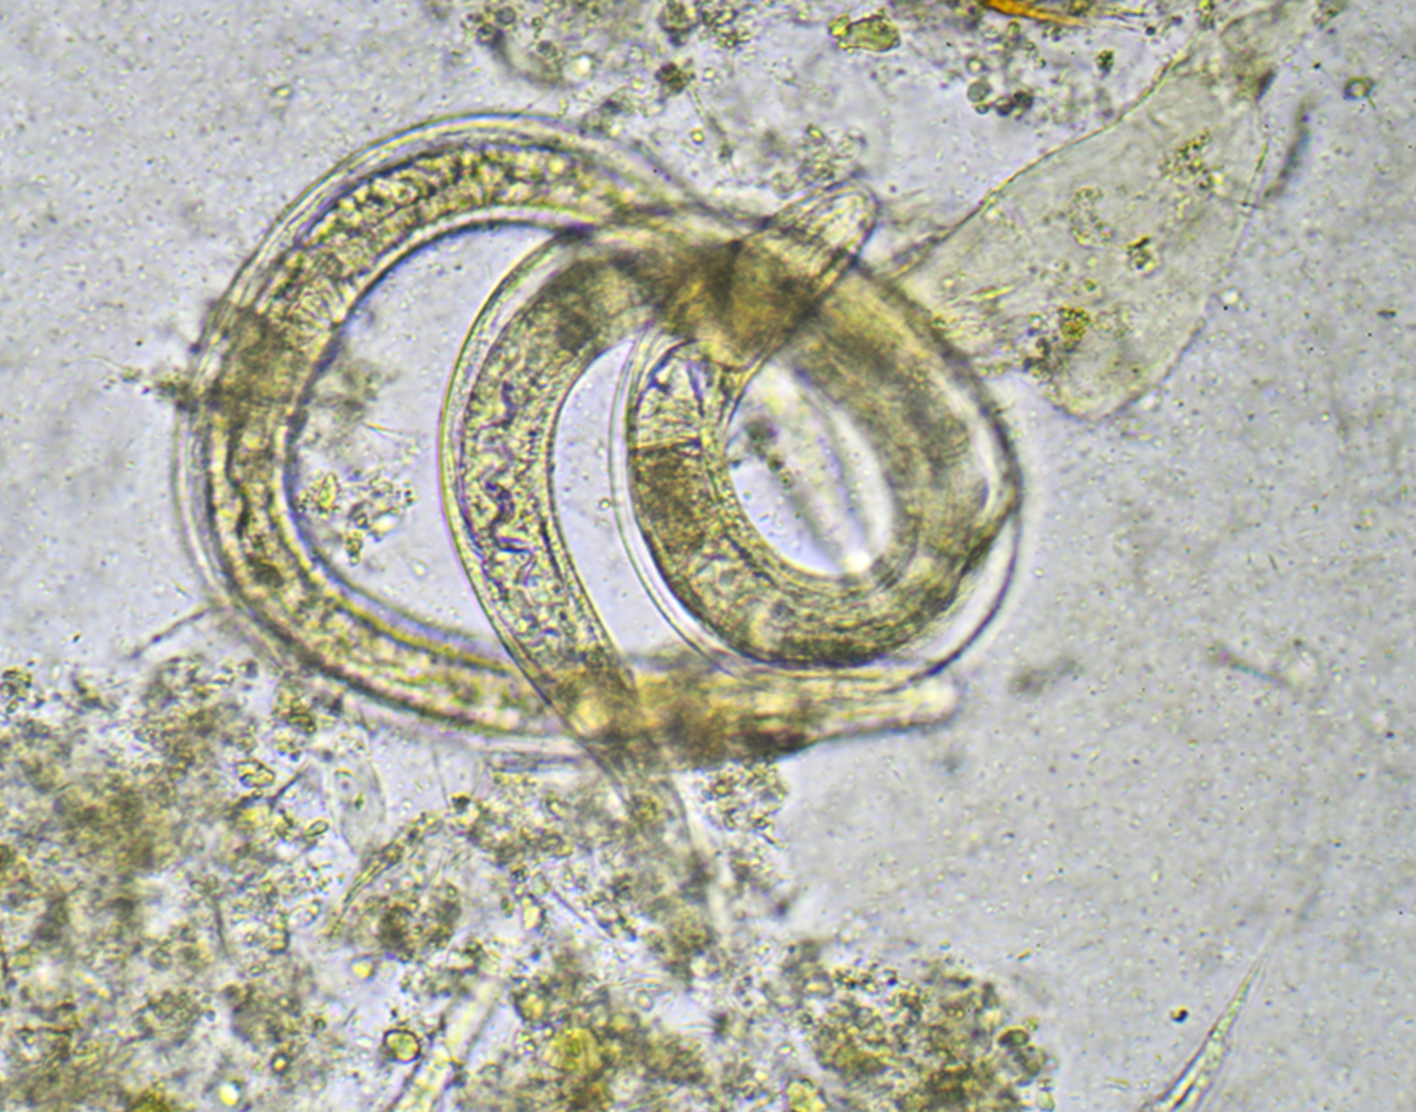 parasites in stool microscope